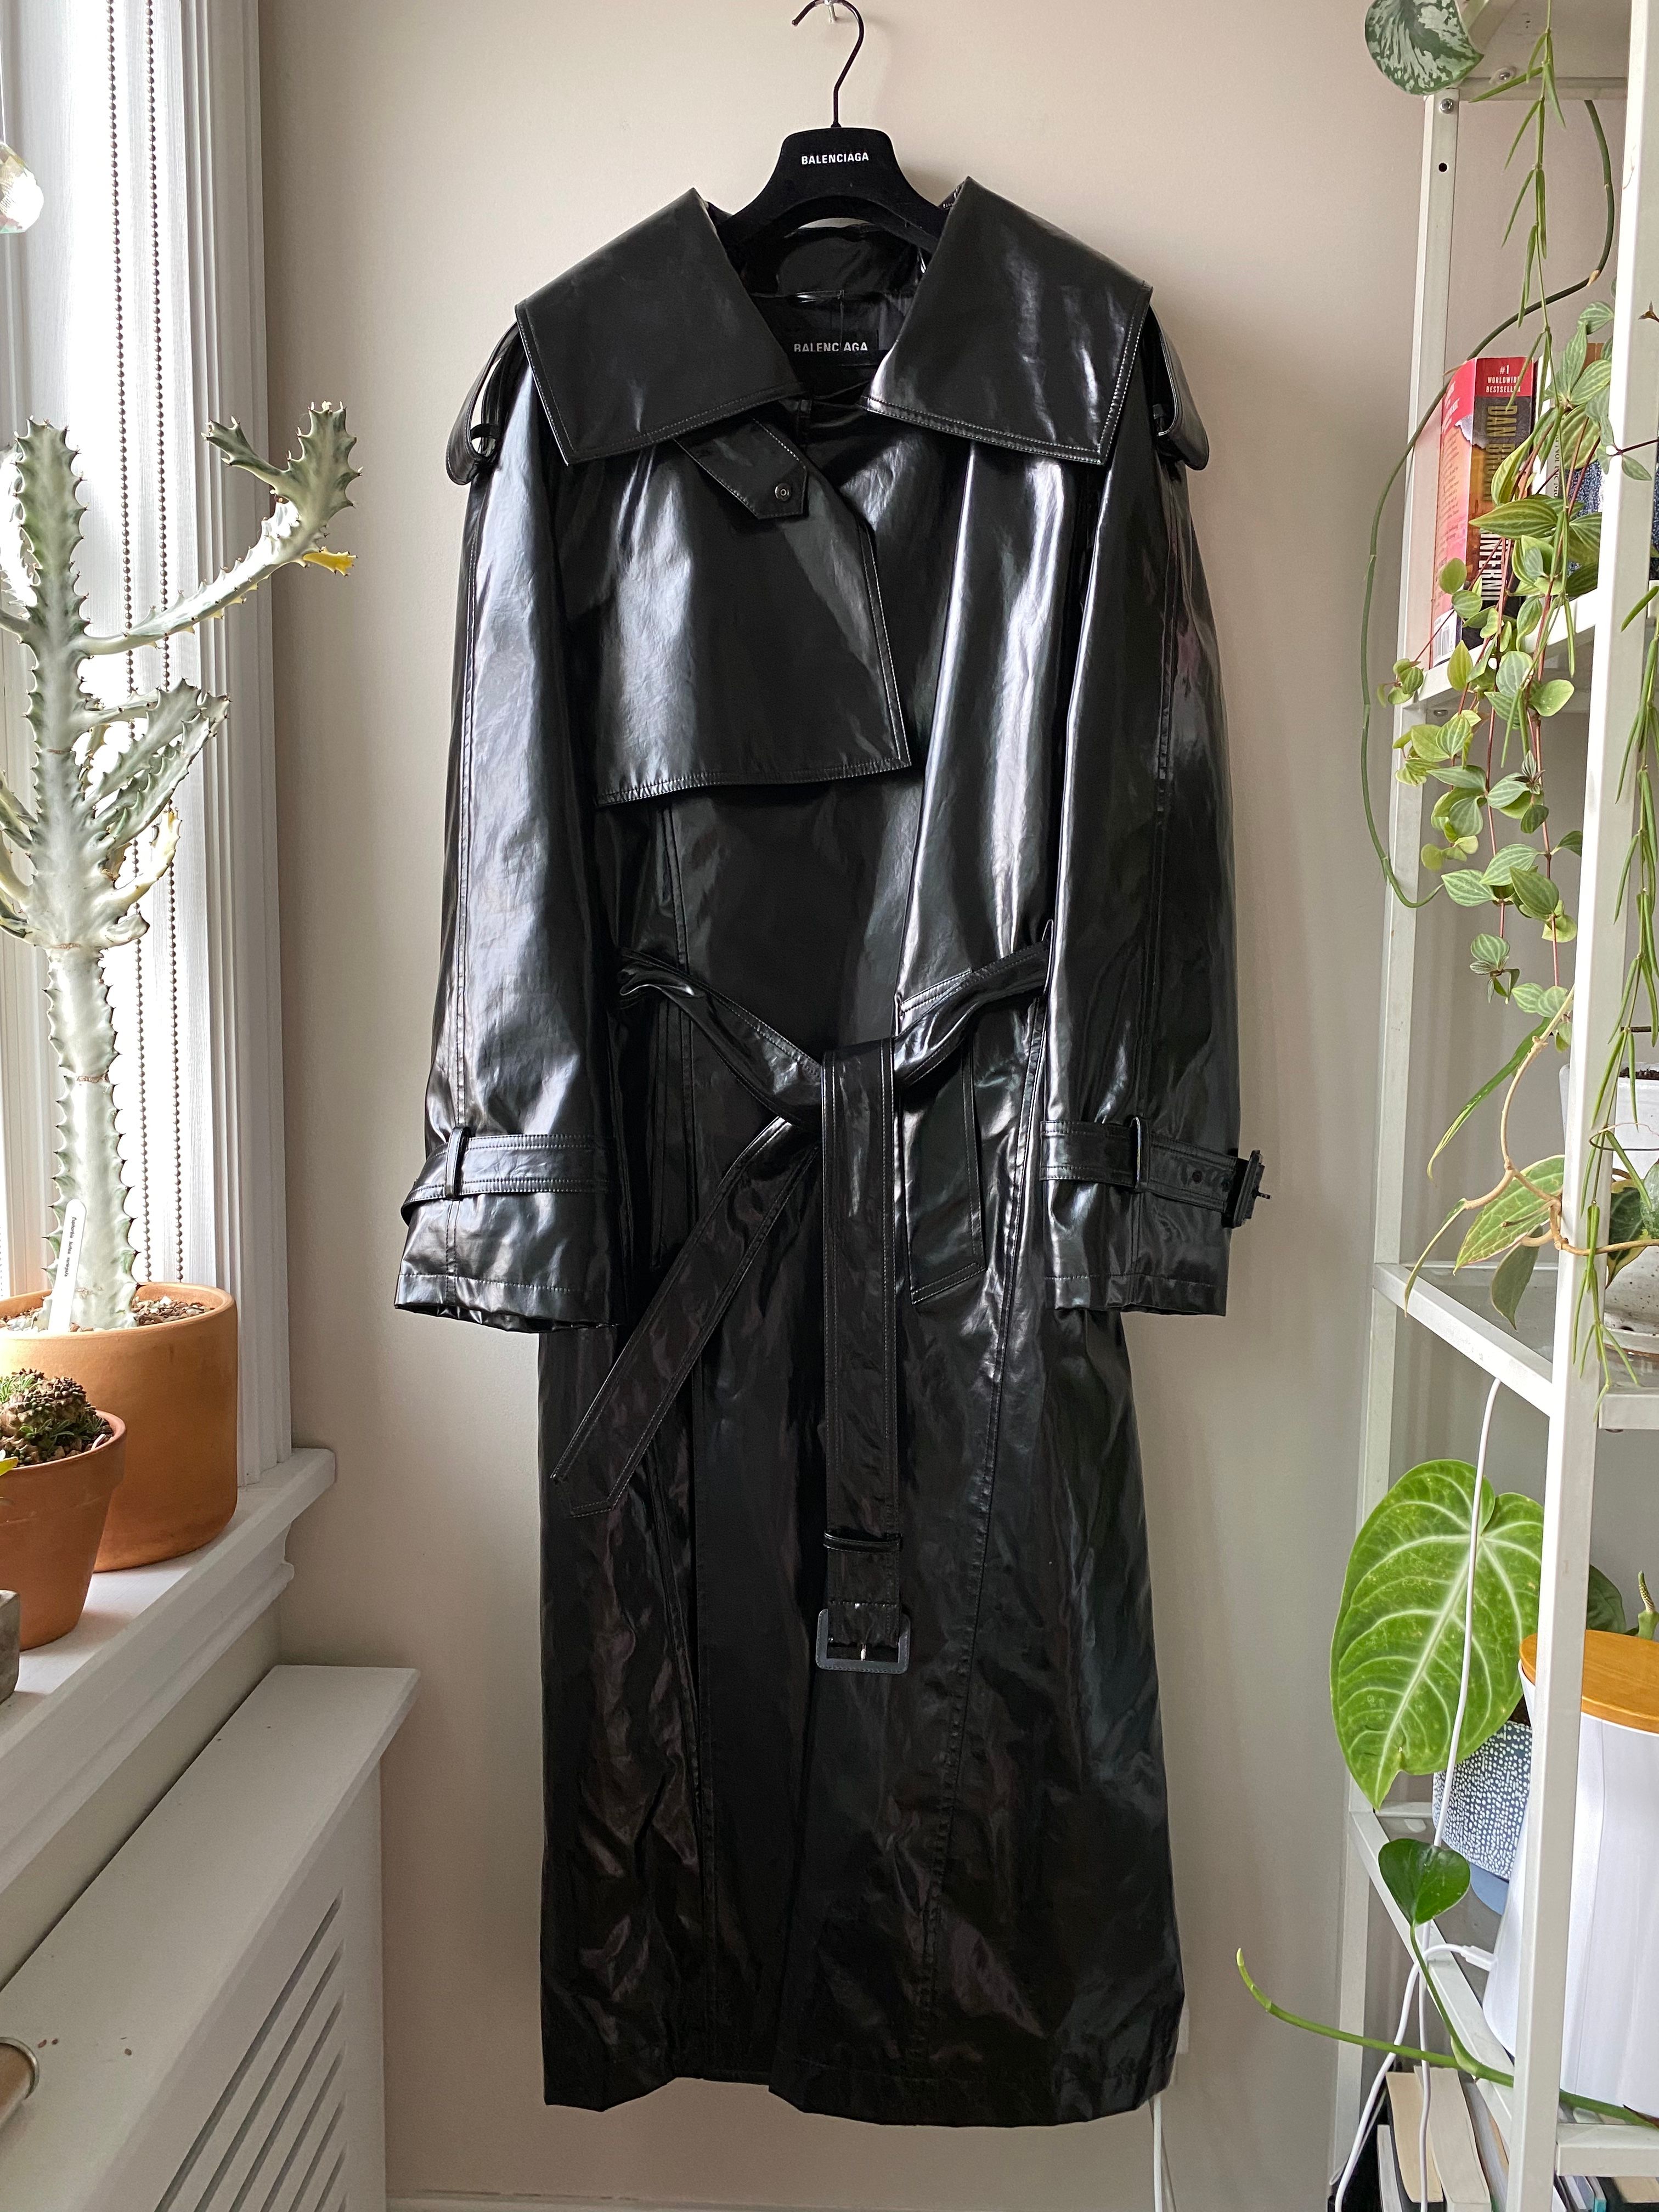 Balenciaga *FINAL DROP* Incognito Trench Coat Size US S / EU 44-46 / 1 - 1 Preview